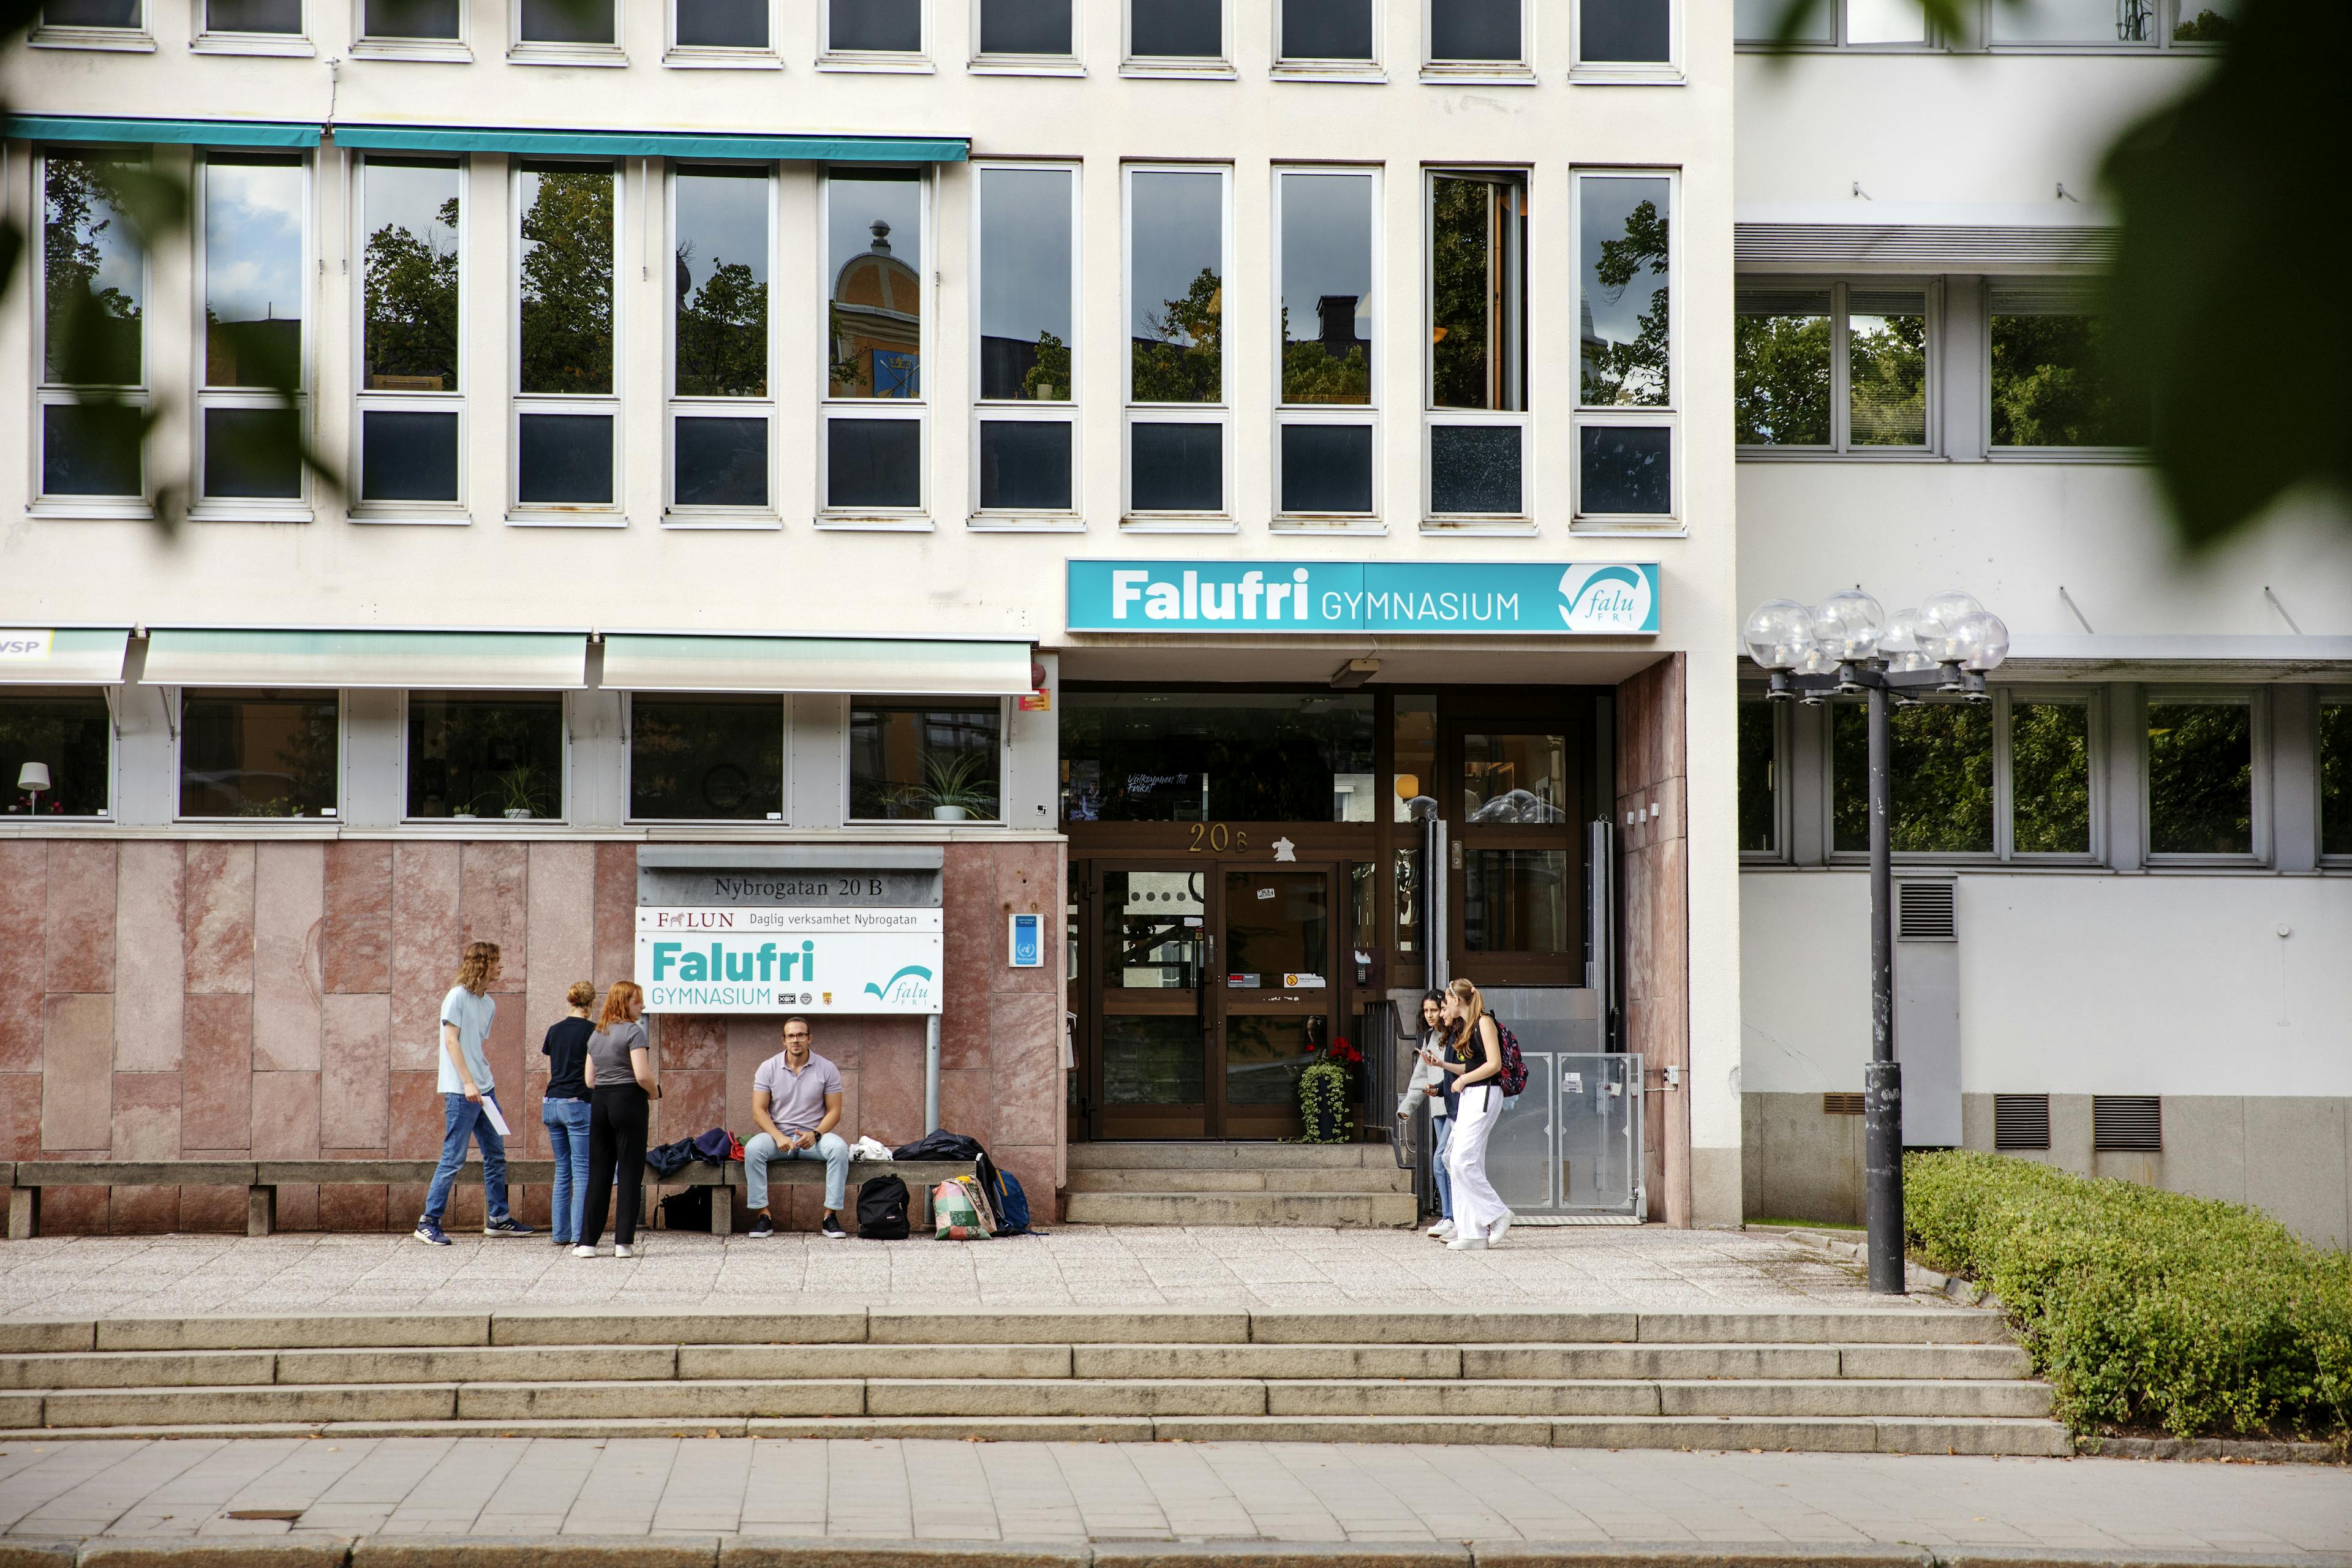 Falu Frigymnasium i Falun